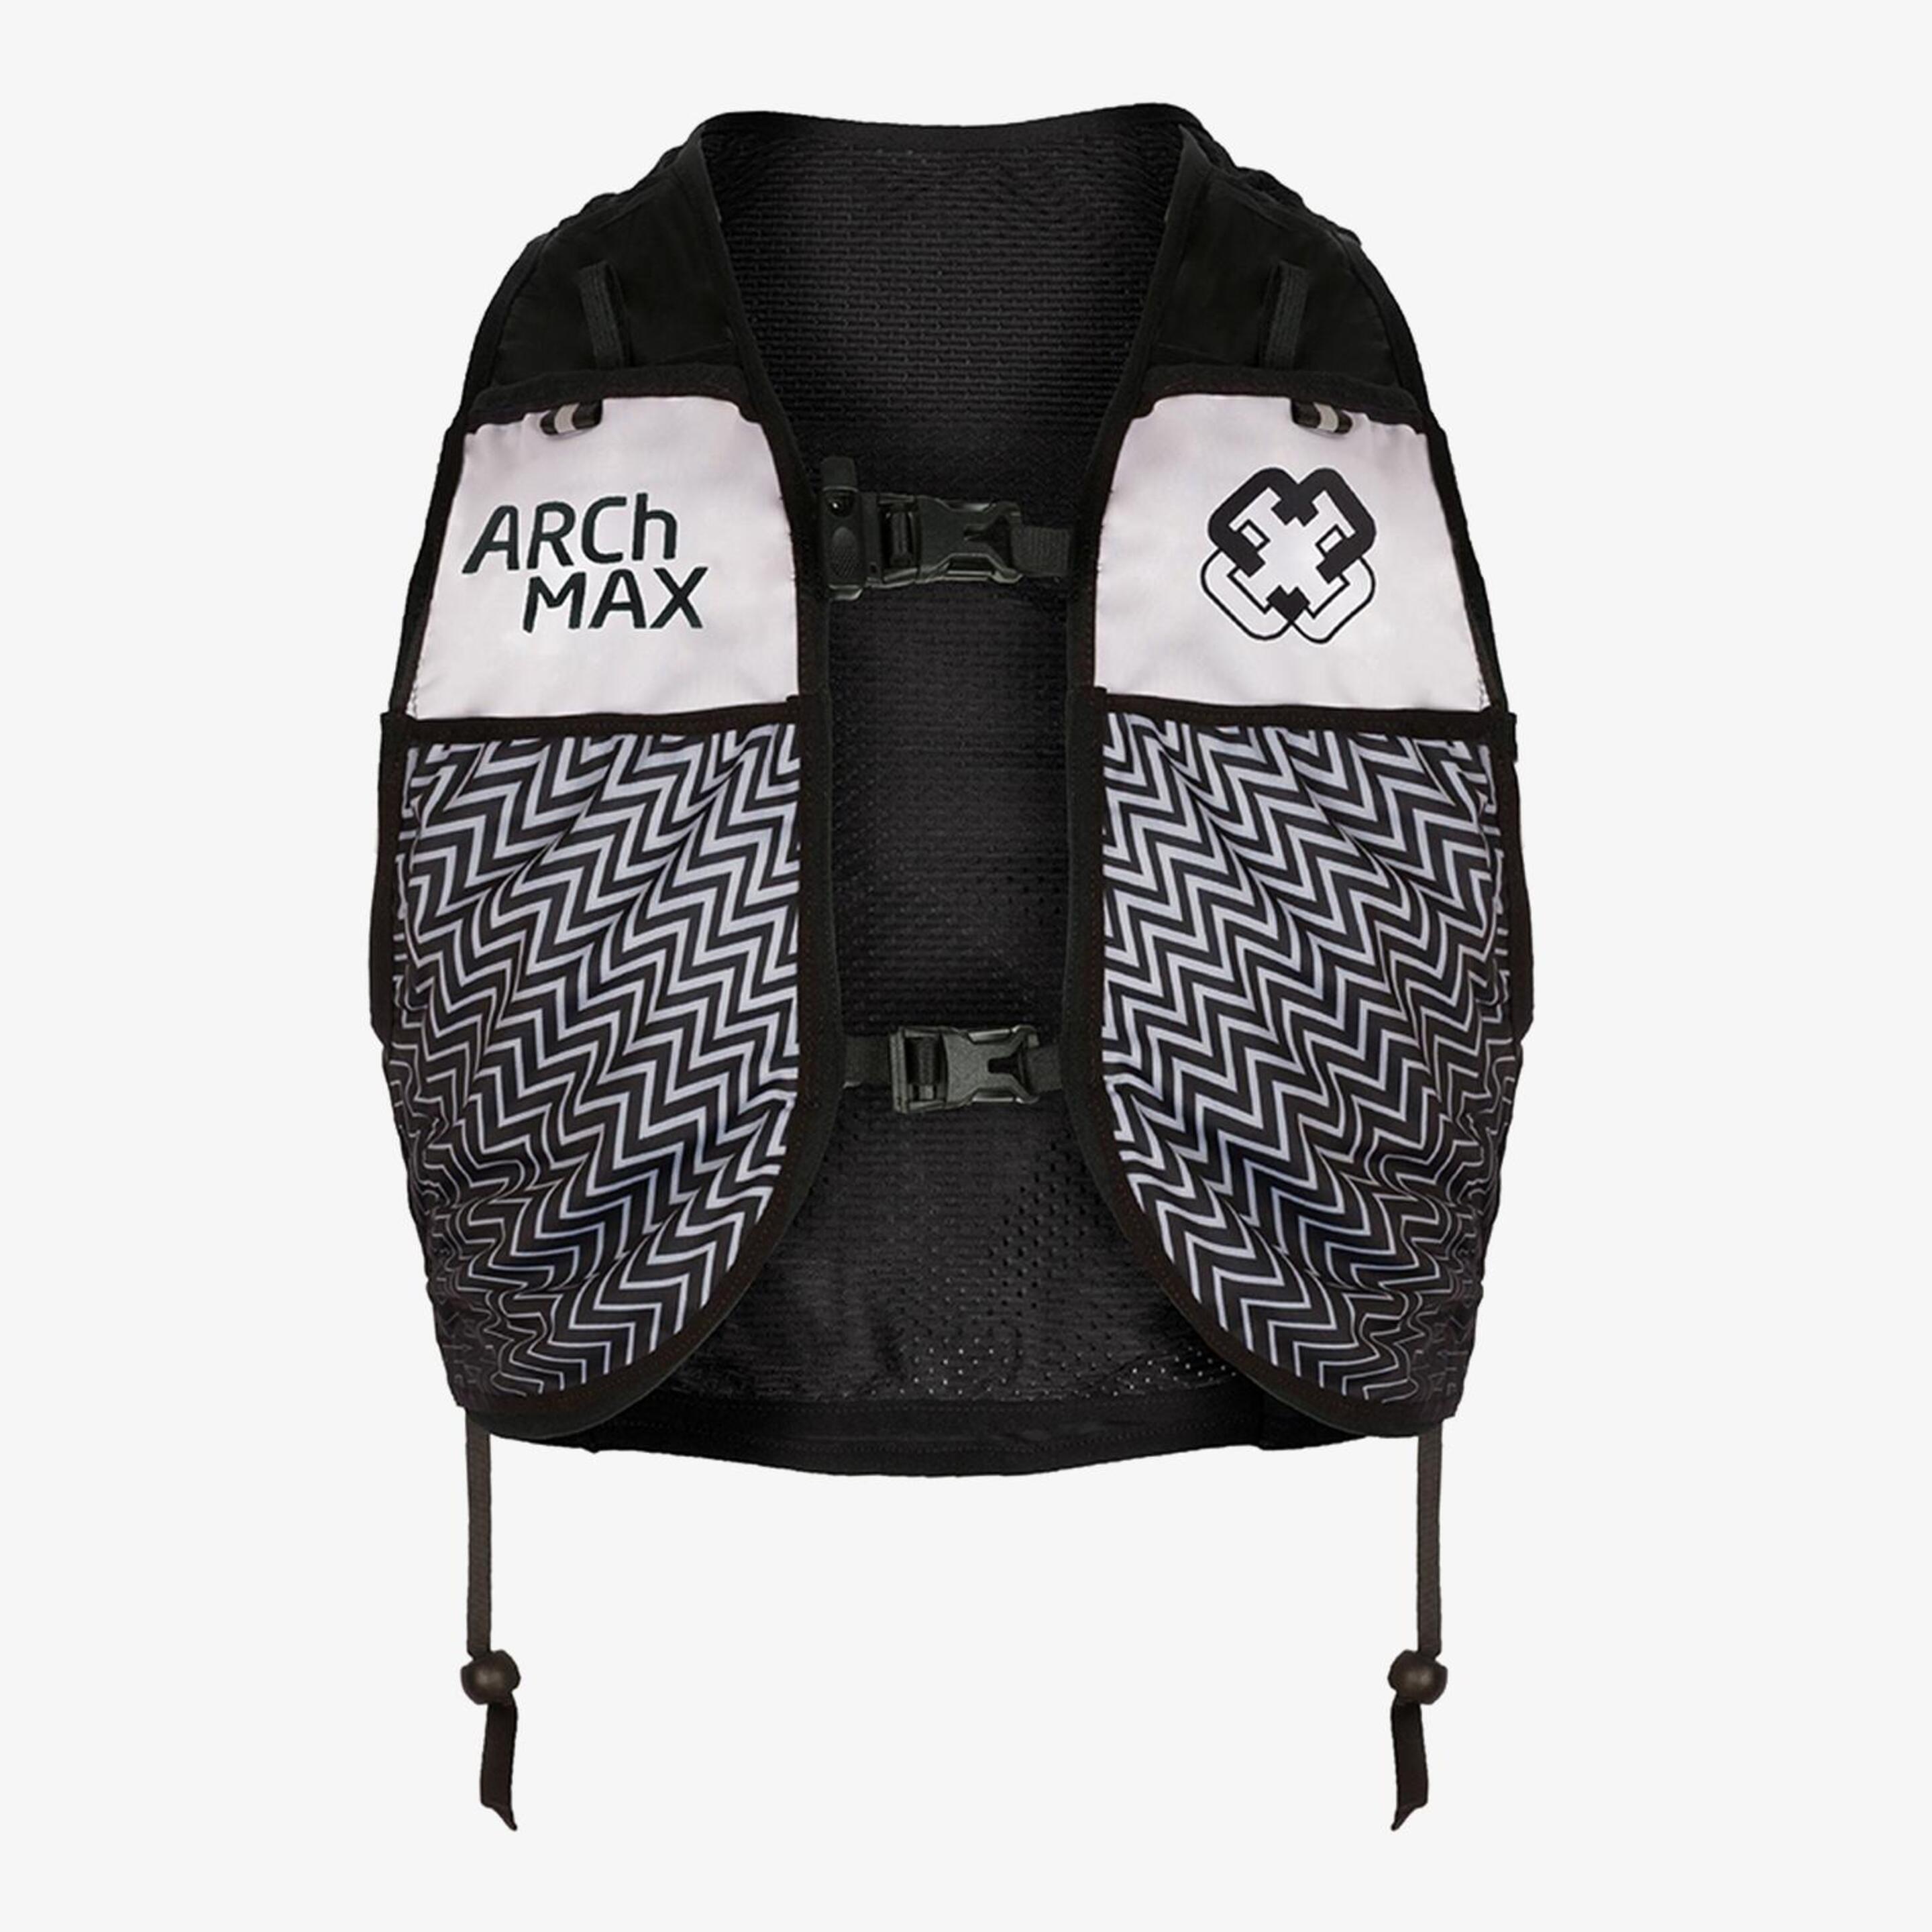 Arch Max Hydratation Vest